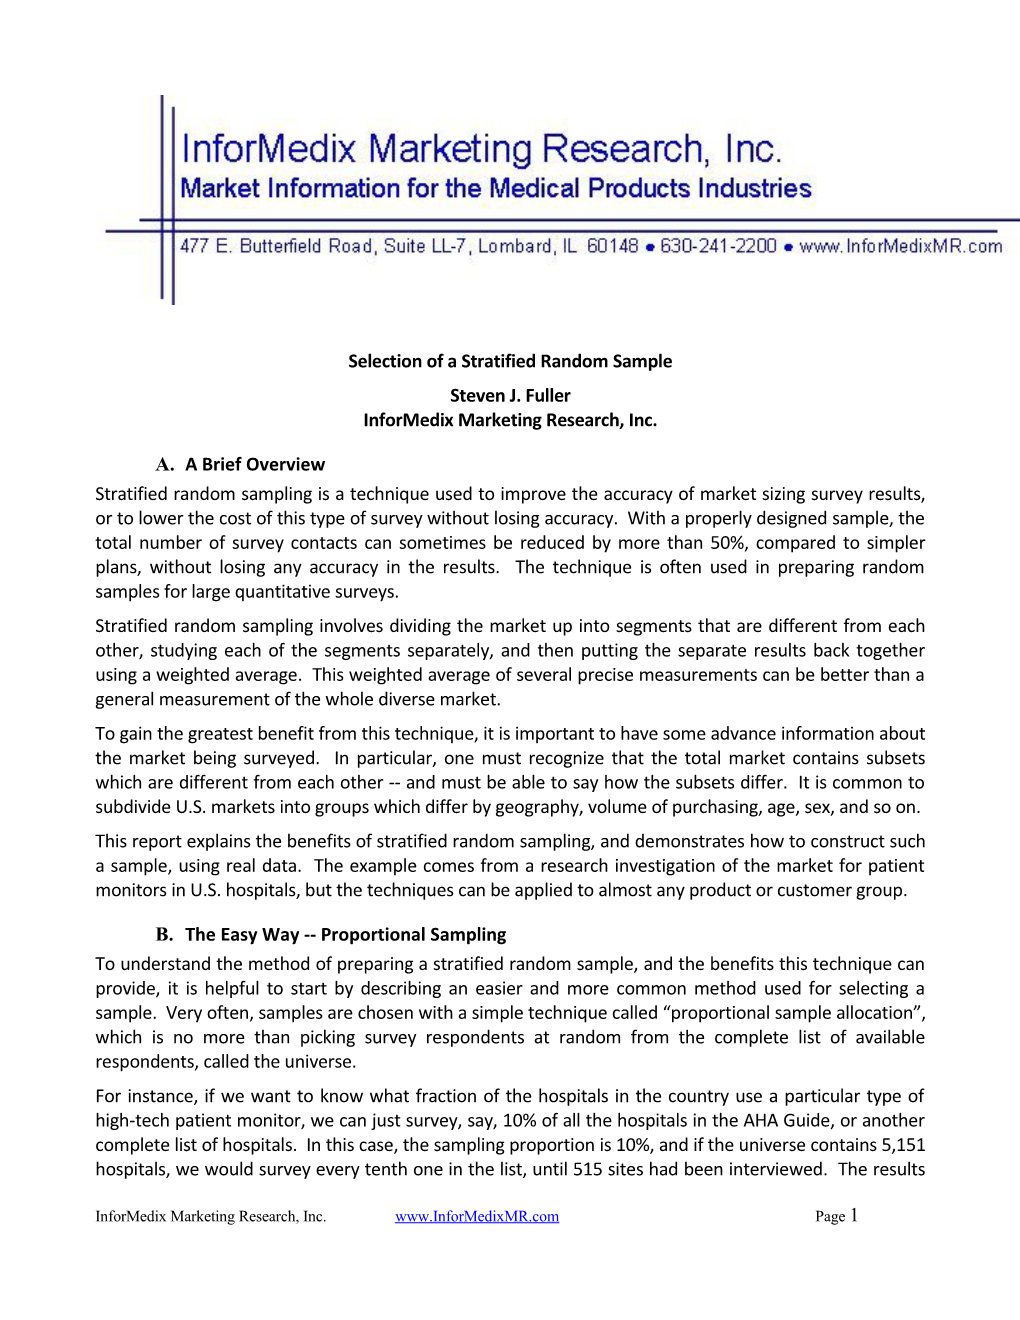 Informedix Marketing Research, Inc. 1